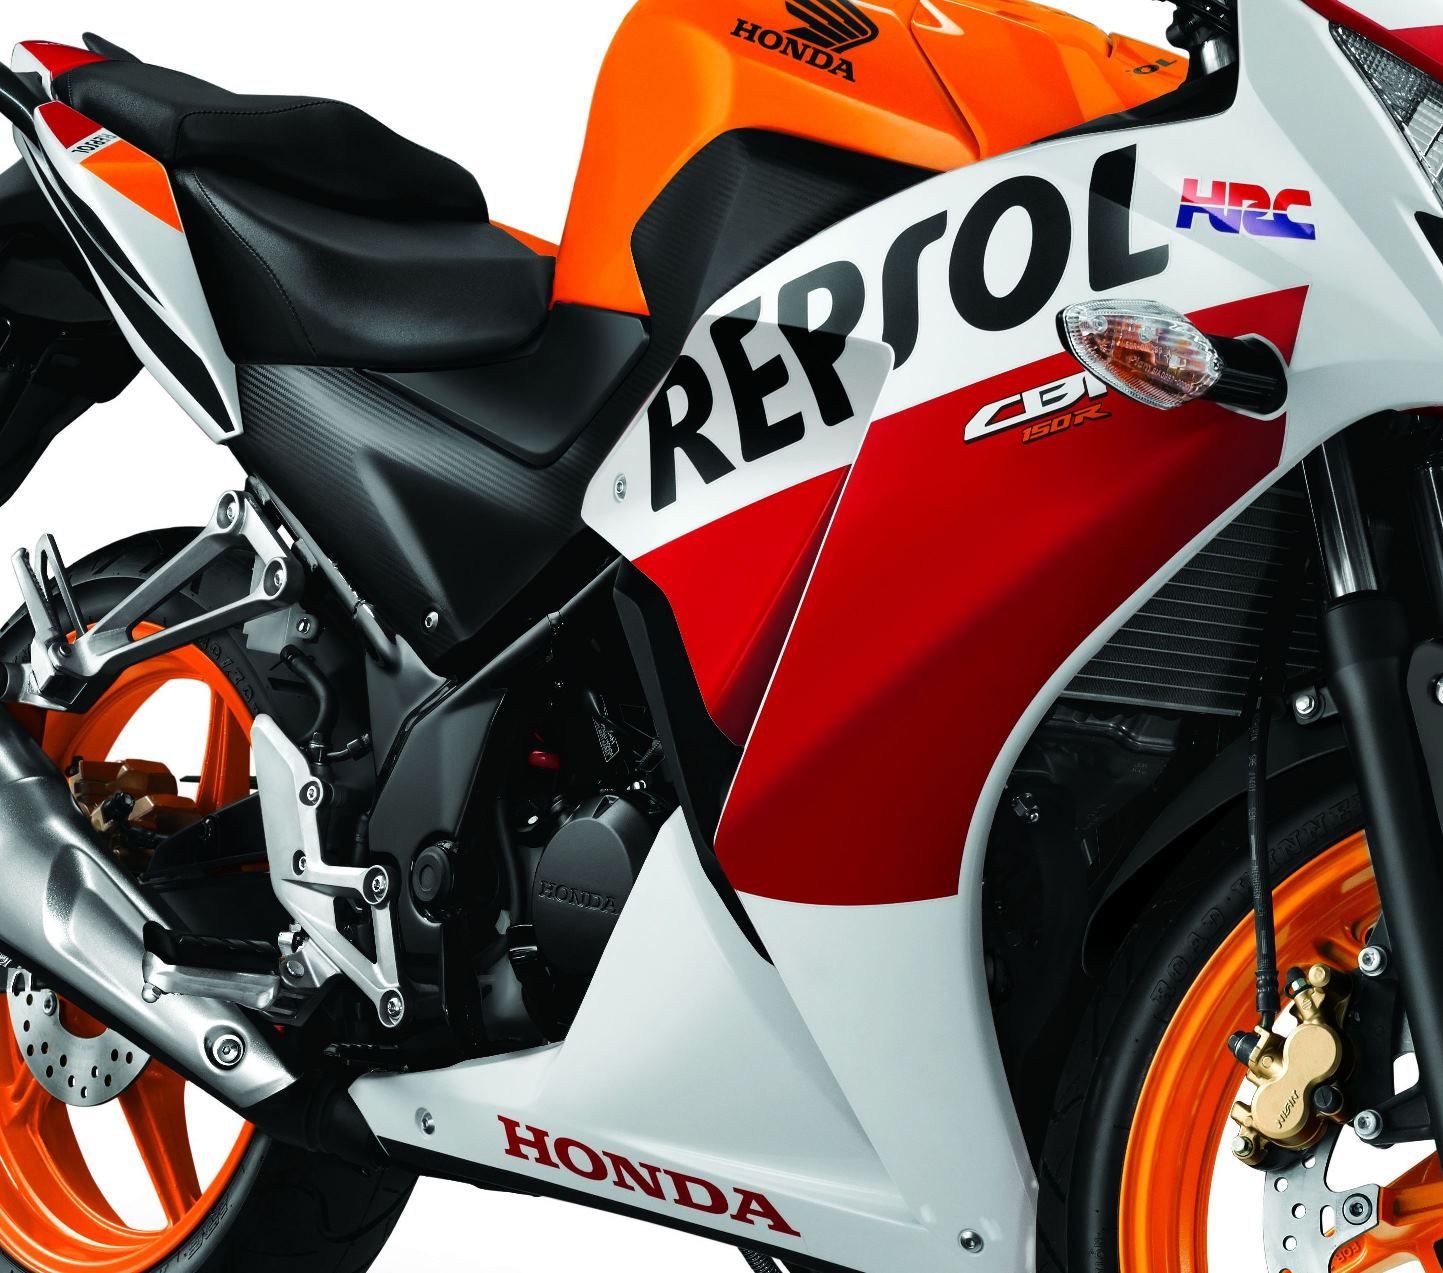 2015 Honda Cbr150r Image - Honda Cbr150r Repsol Bike - HD Wallpaper 